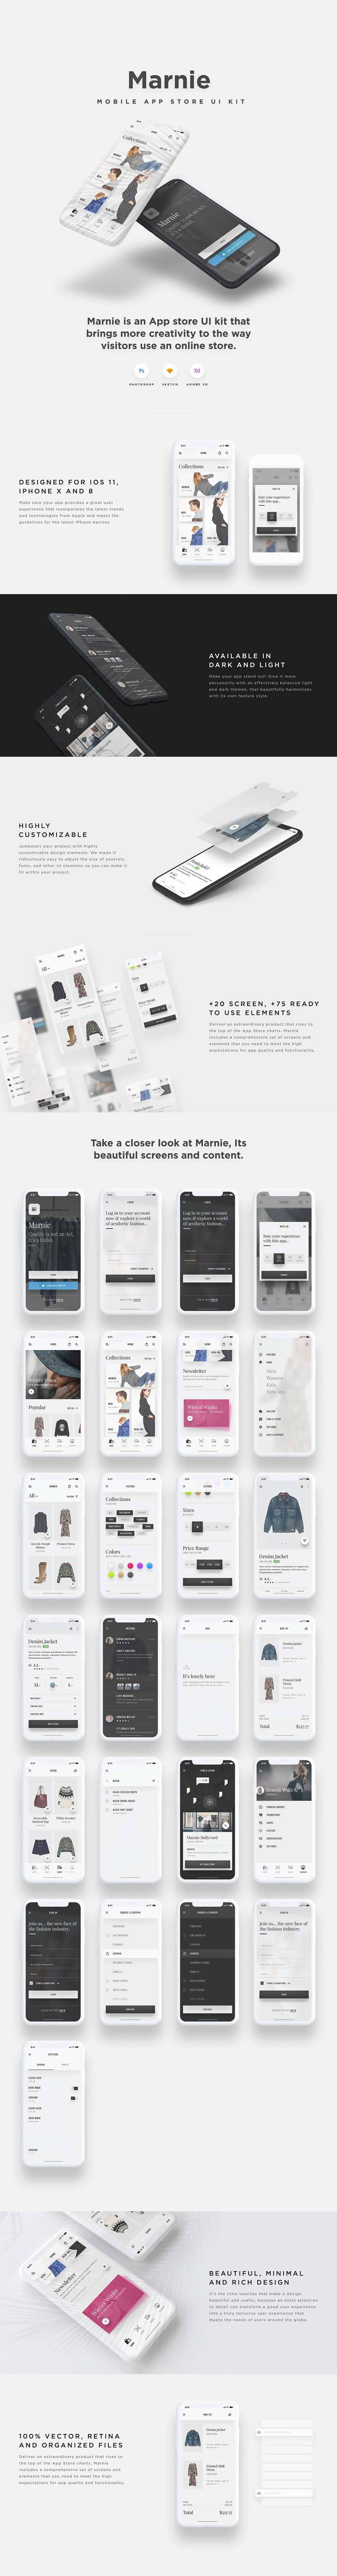 Marnie - E -Commerce Mobile App UI Kit - Adobe XD UI Kit Beispiel